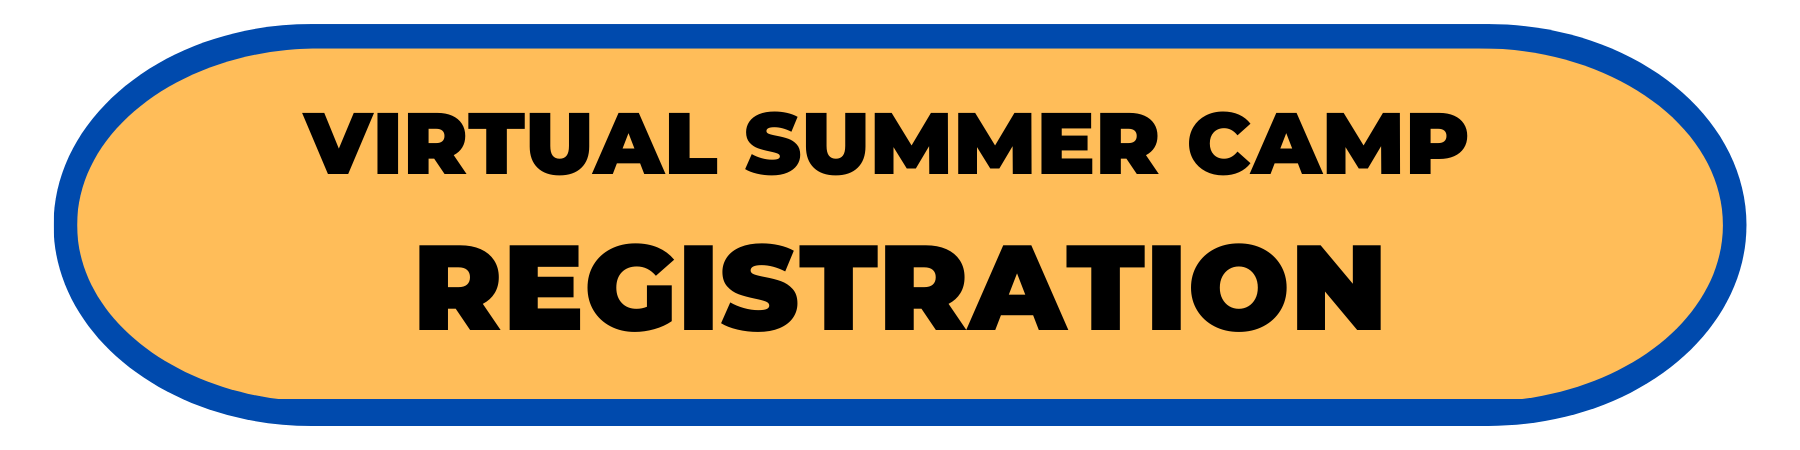 Virtual Summer Camp Registration